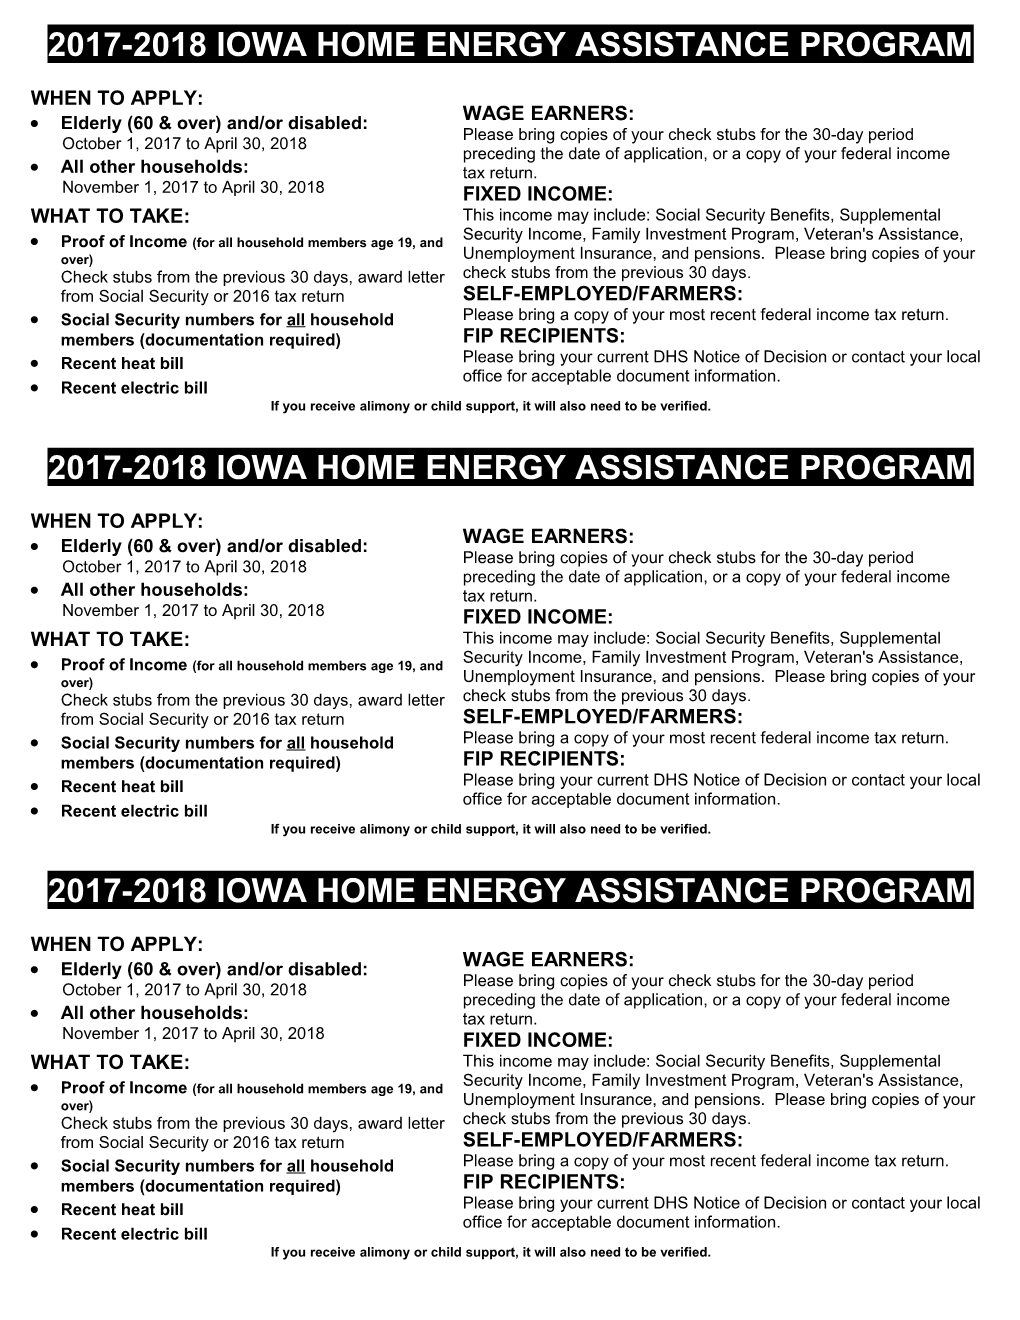 2001-2002 Iowa Home Energy Assistance Program